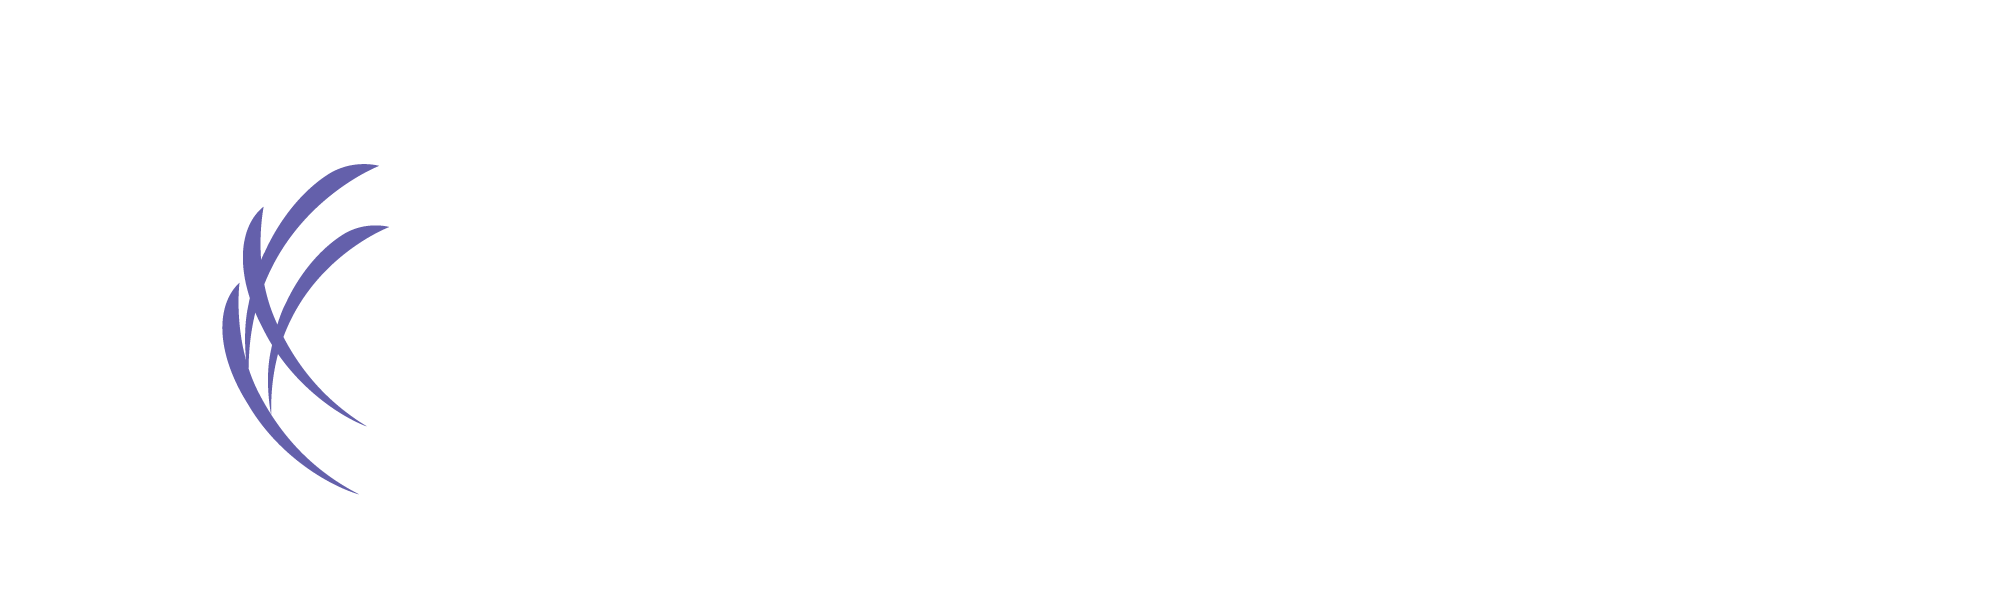 Kaptivate-logo-reverse-no-tagline